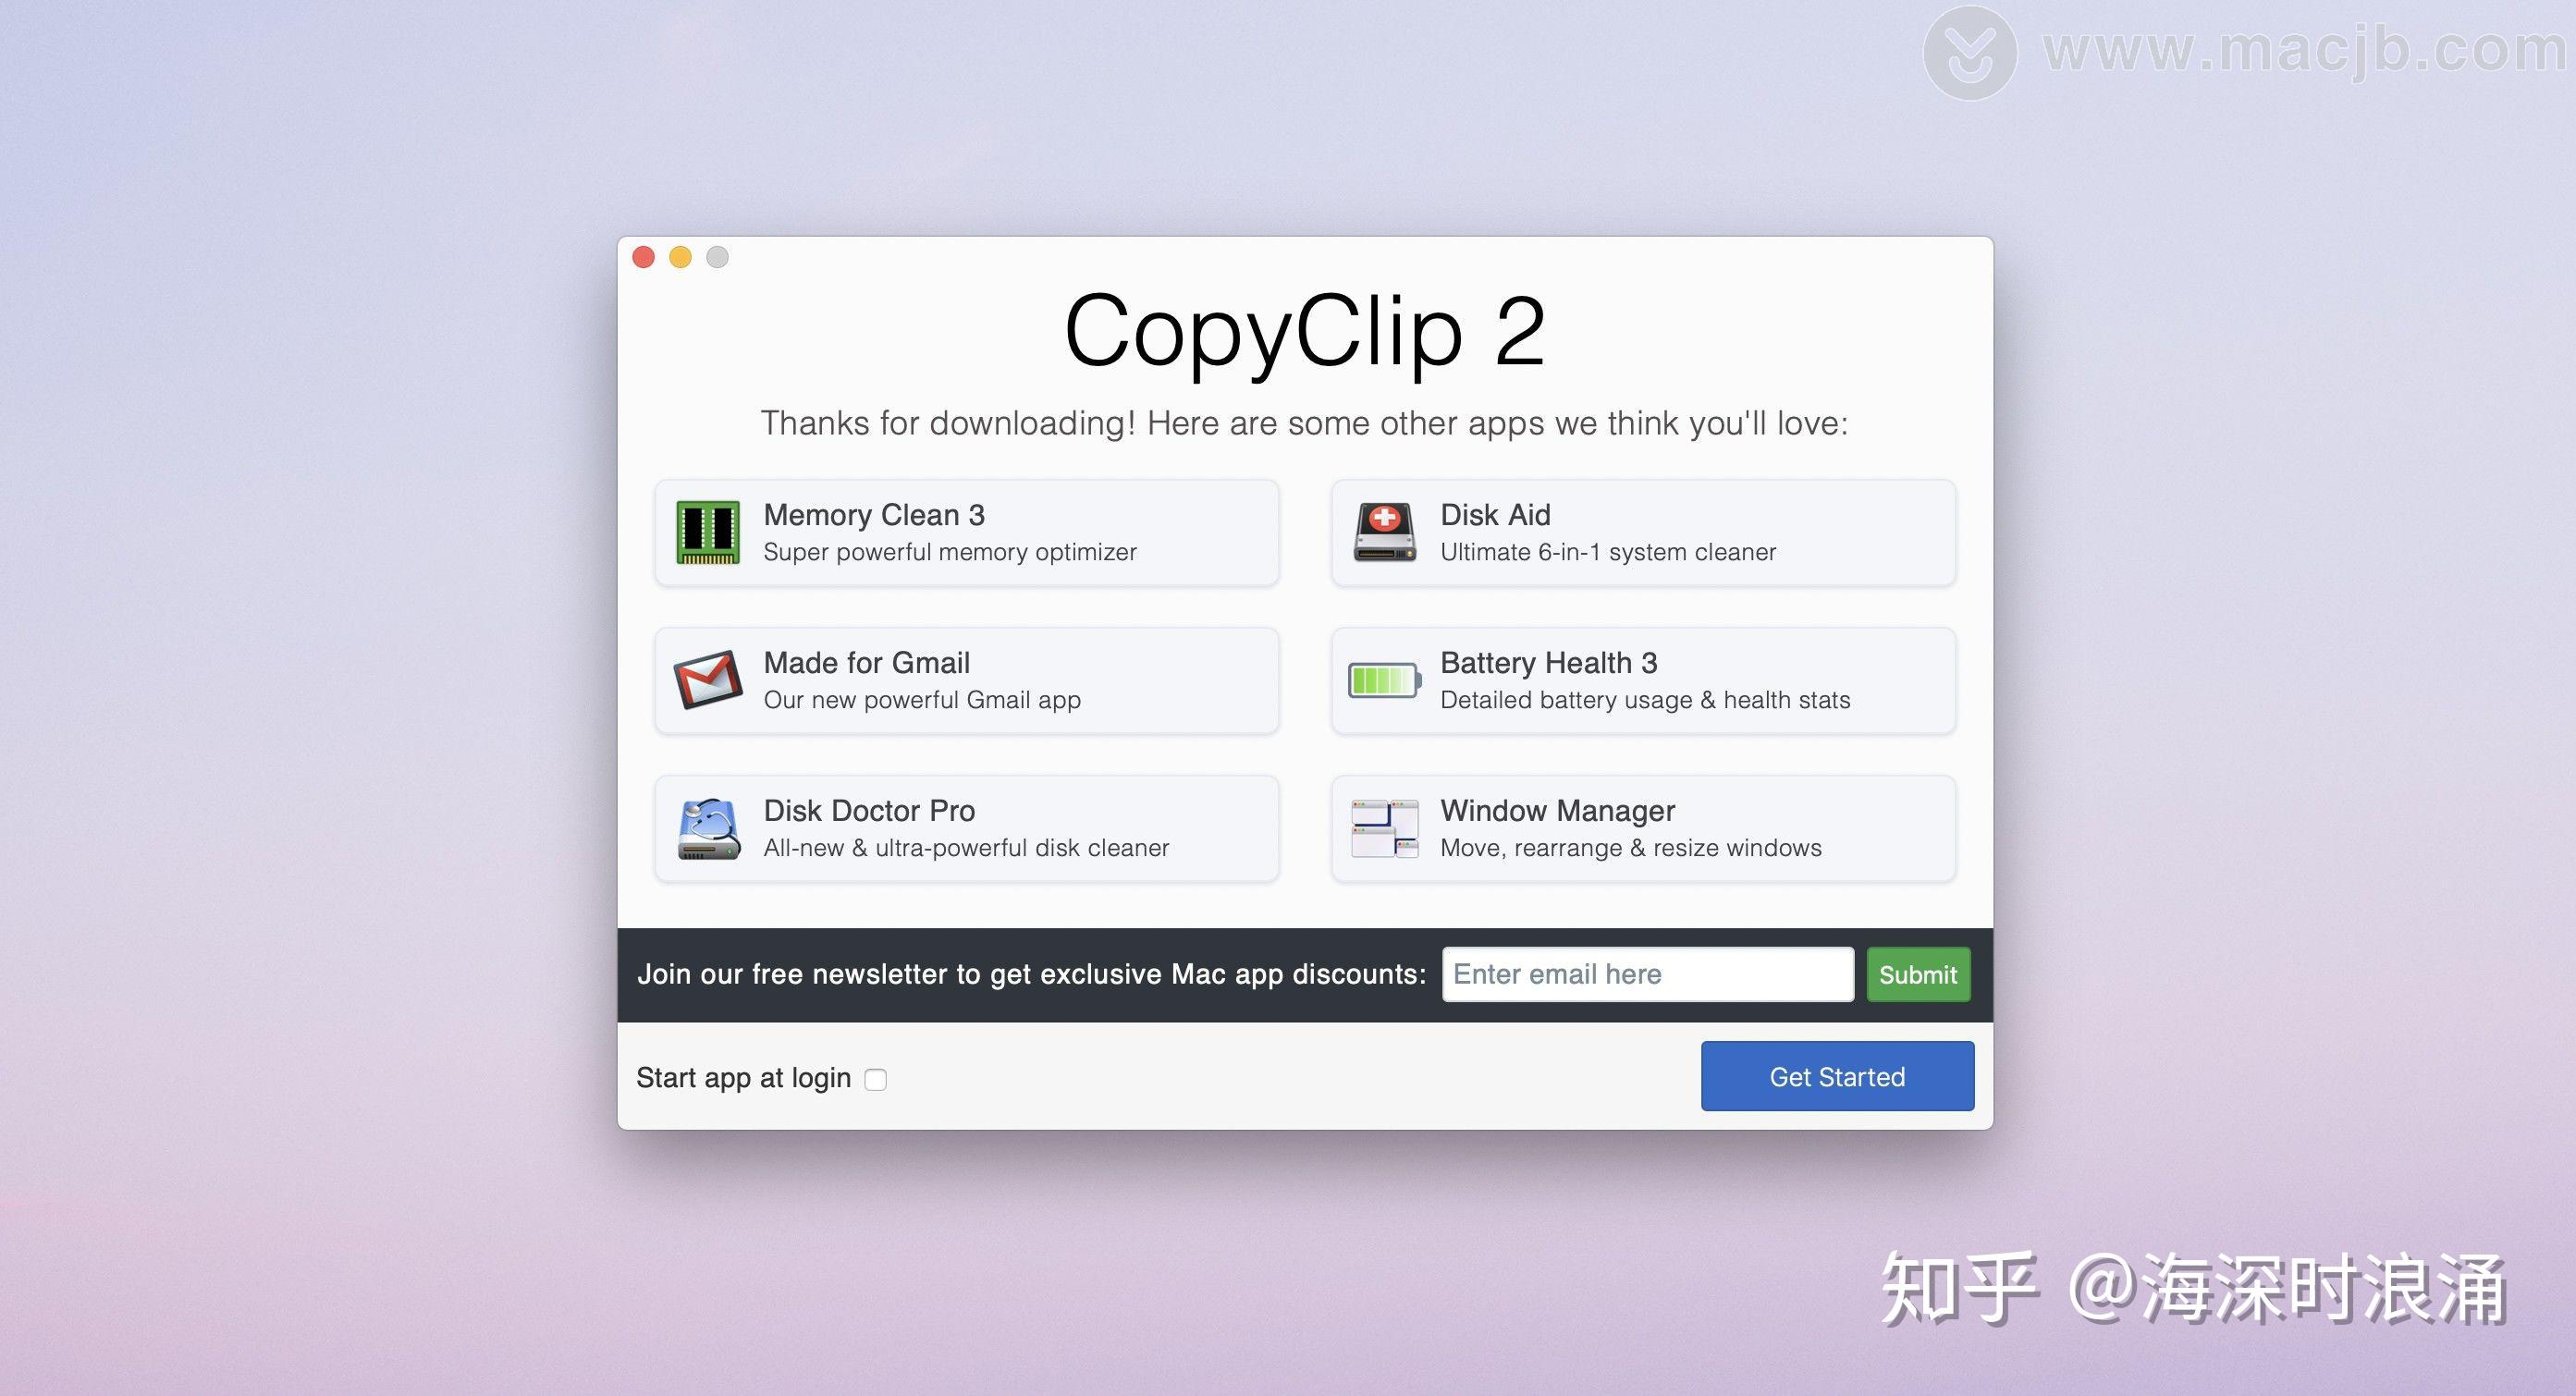 download the new CopyClip 2